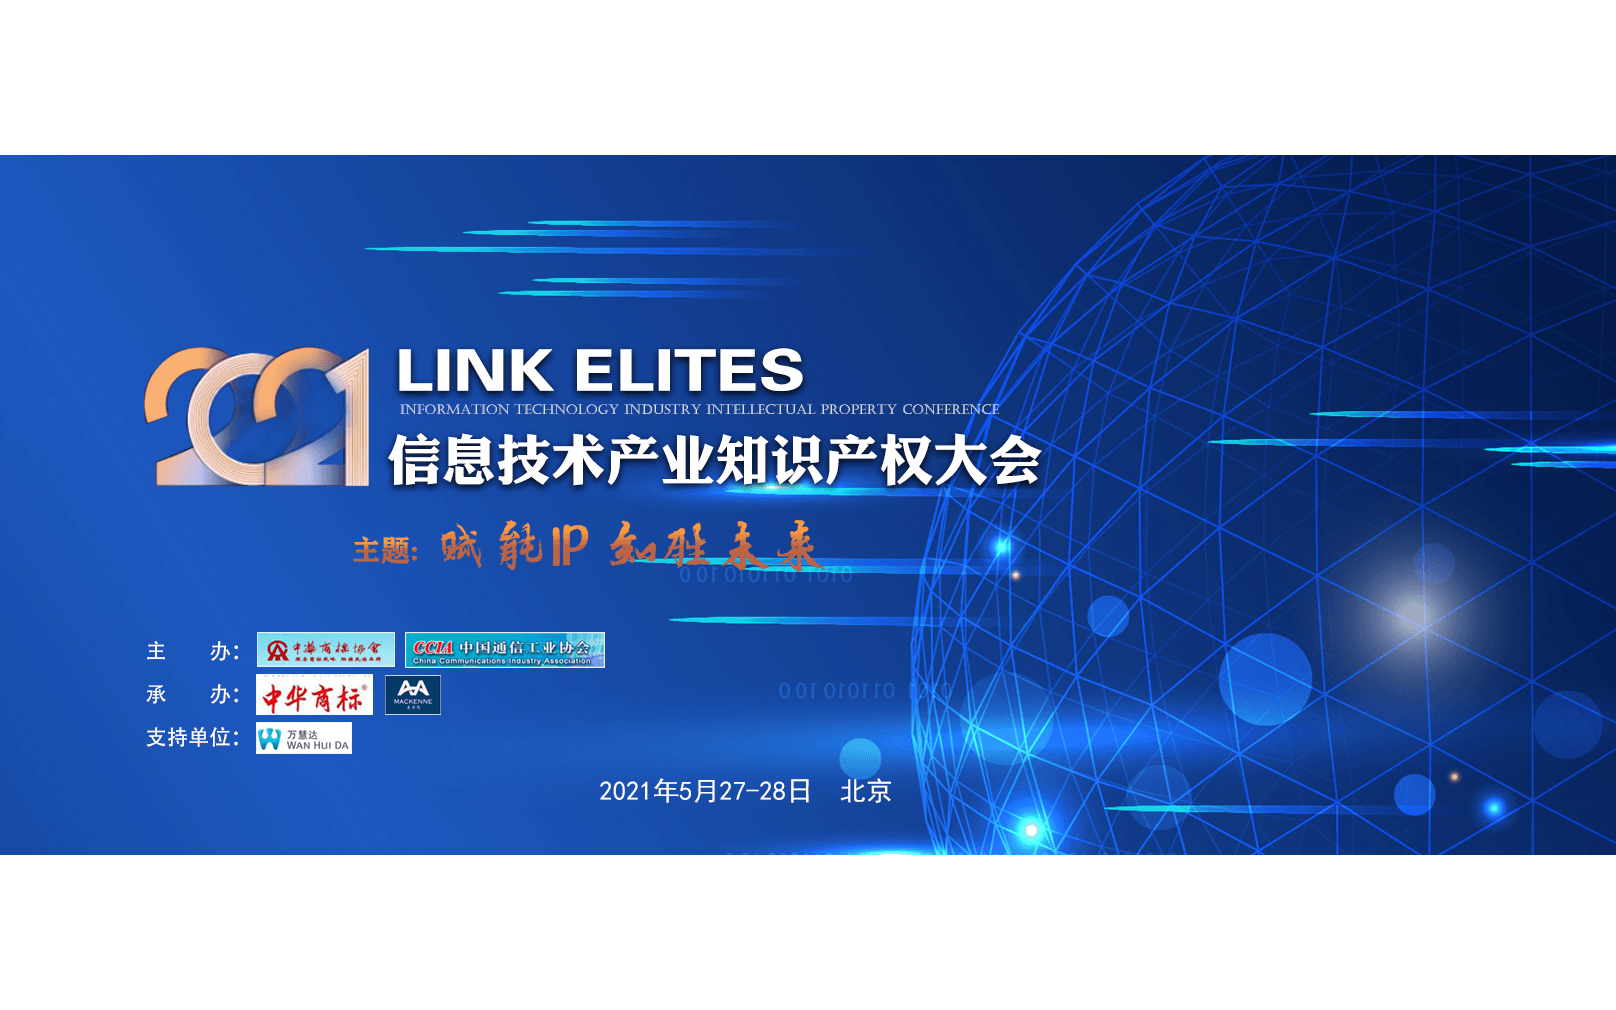 2021LINK ELITES 信息技术产业知识产权大会 